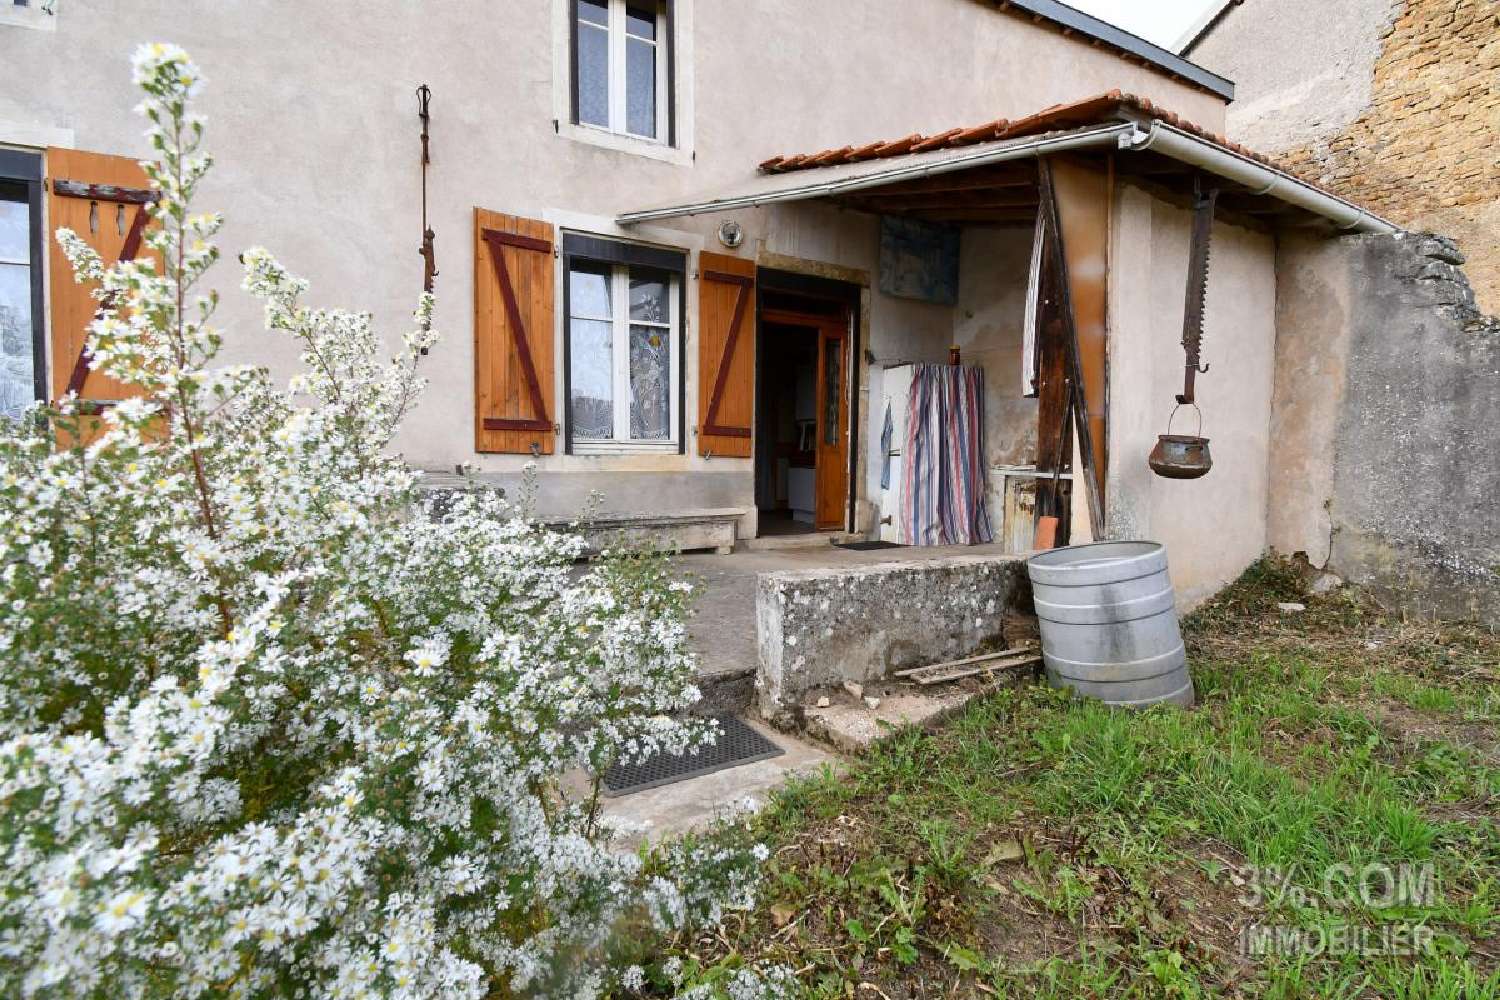  for sale village house Vicherey Vosges 3